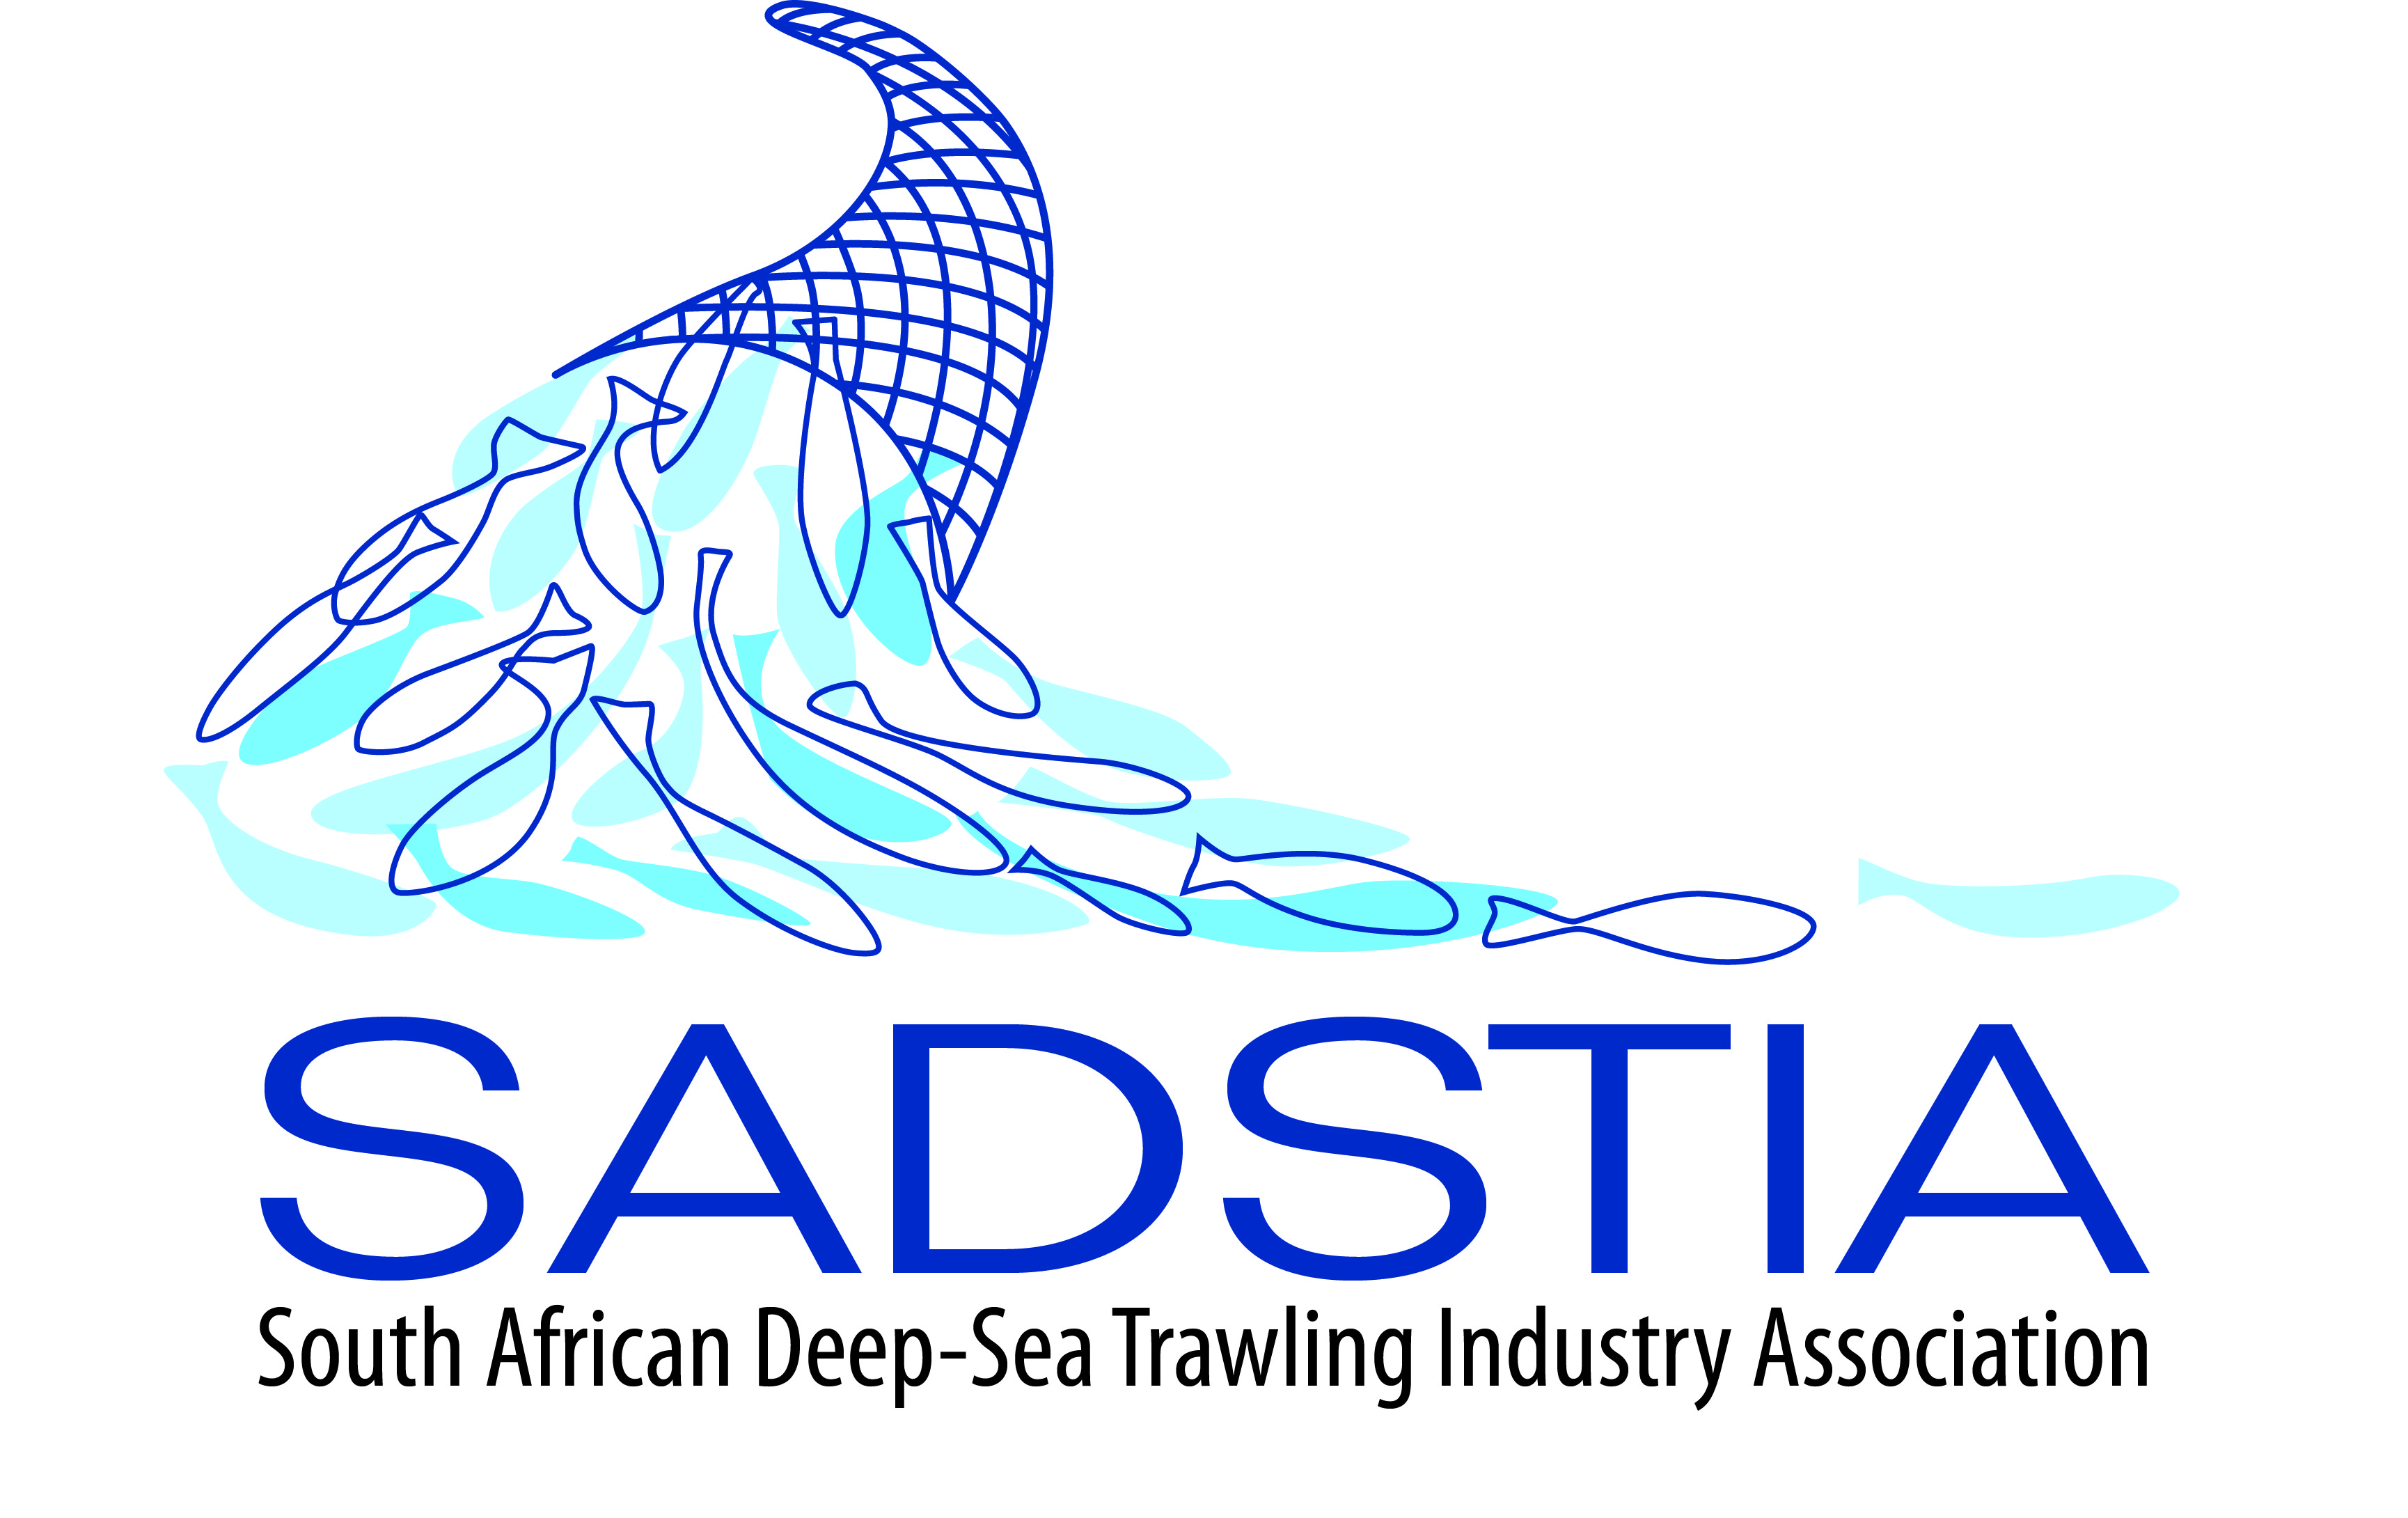 South African Deep-Sea Trawling Industry Association